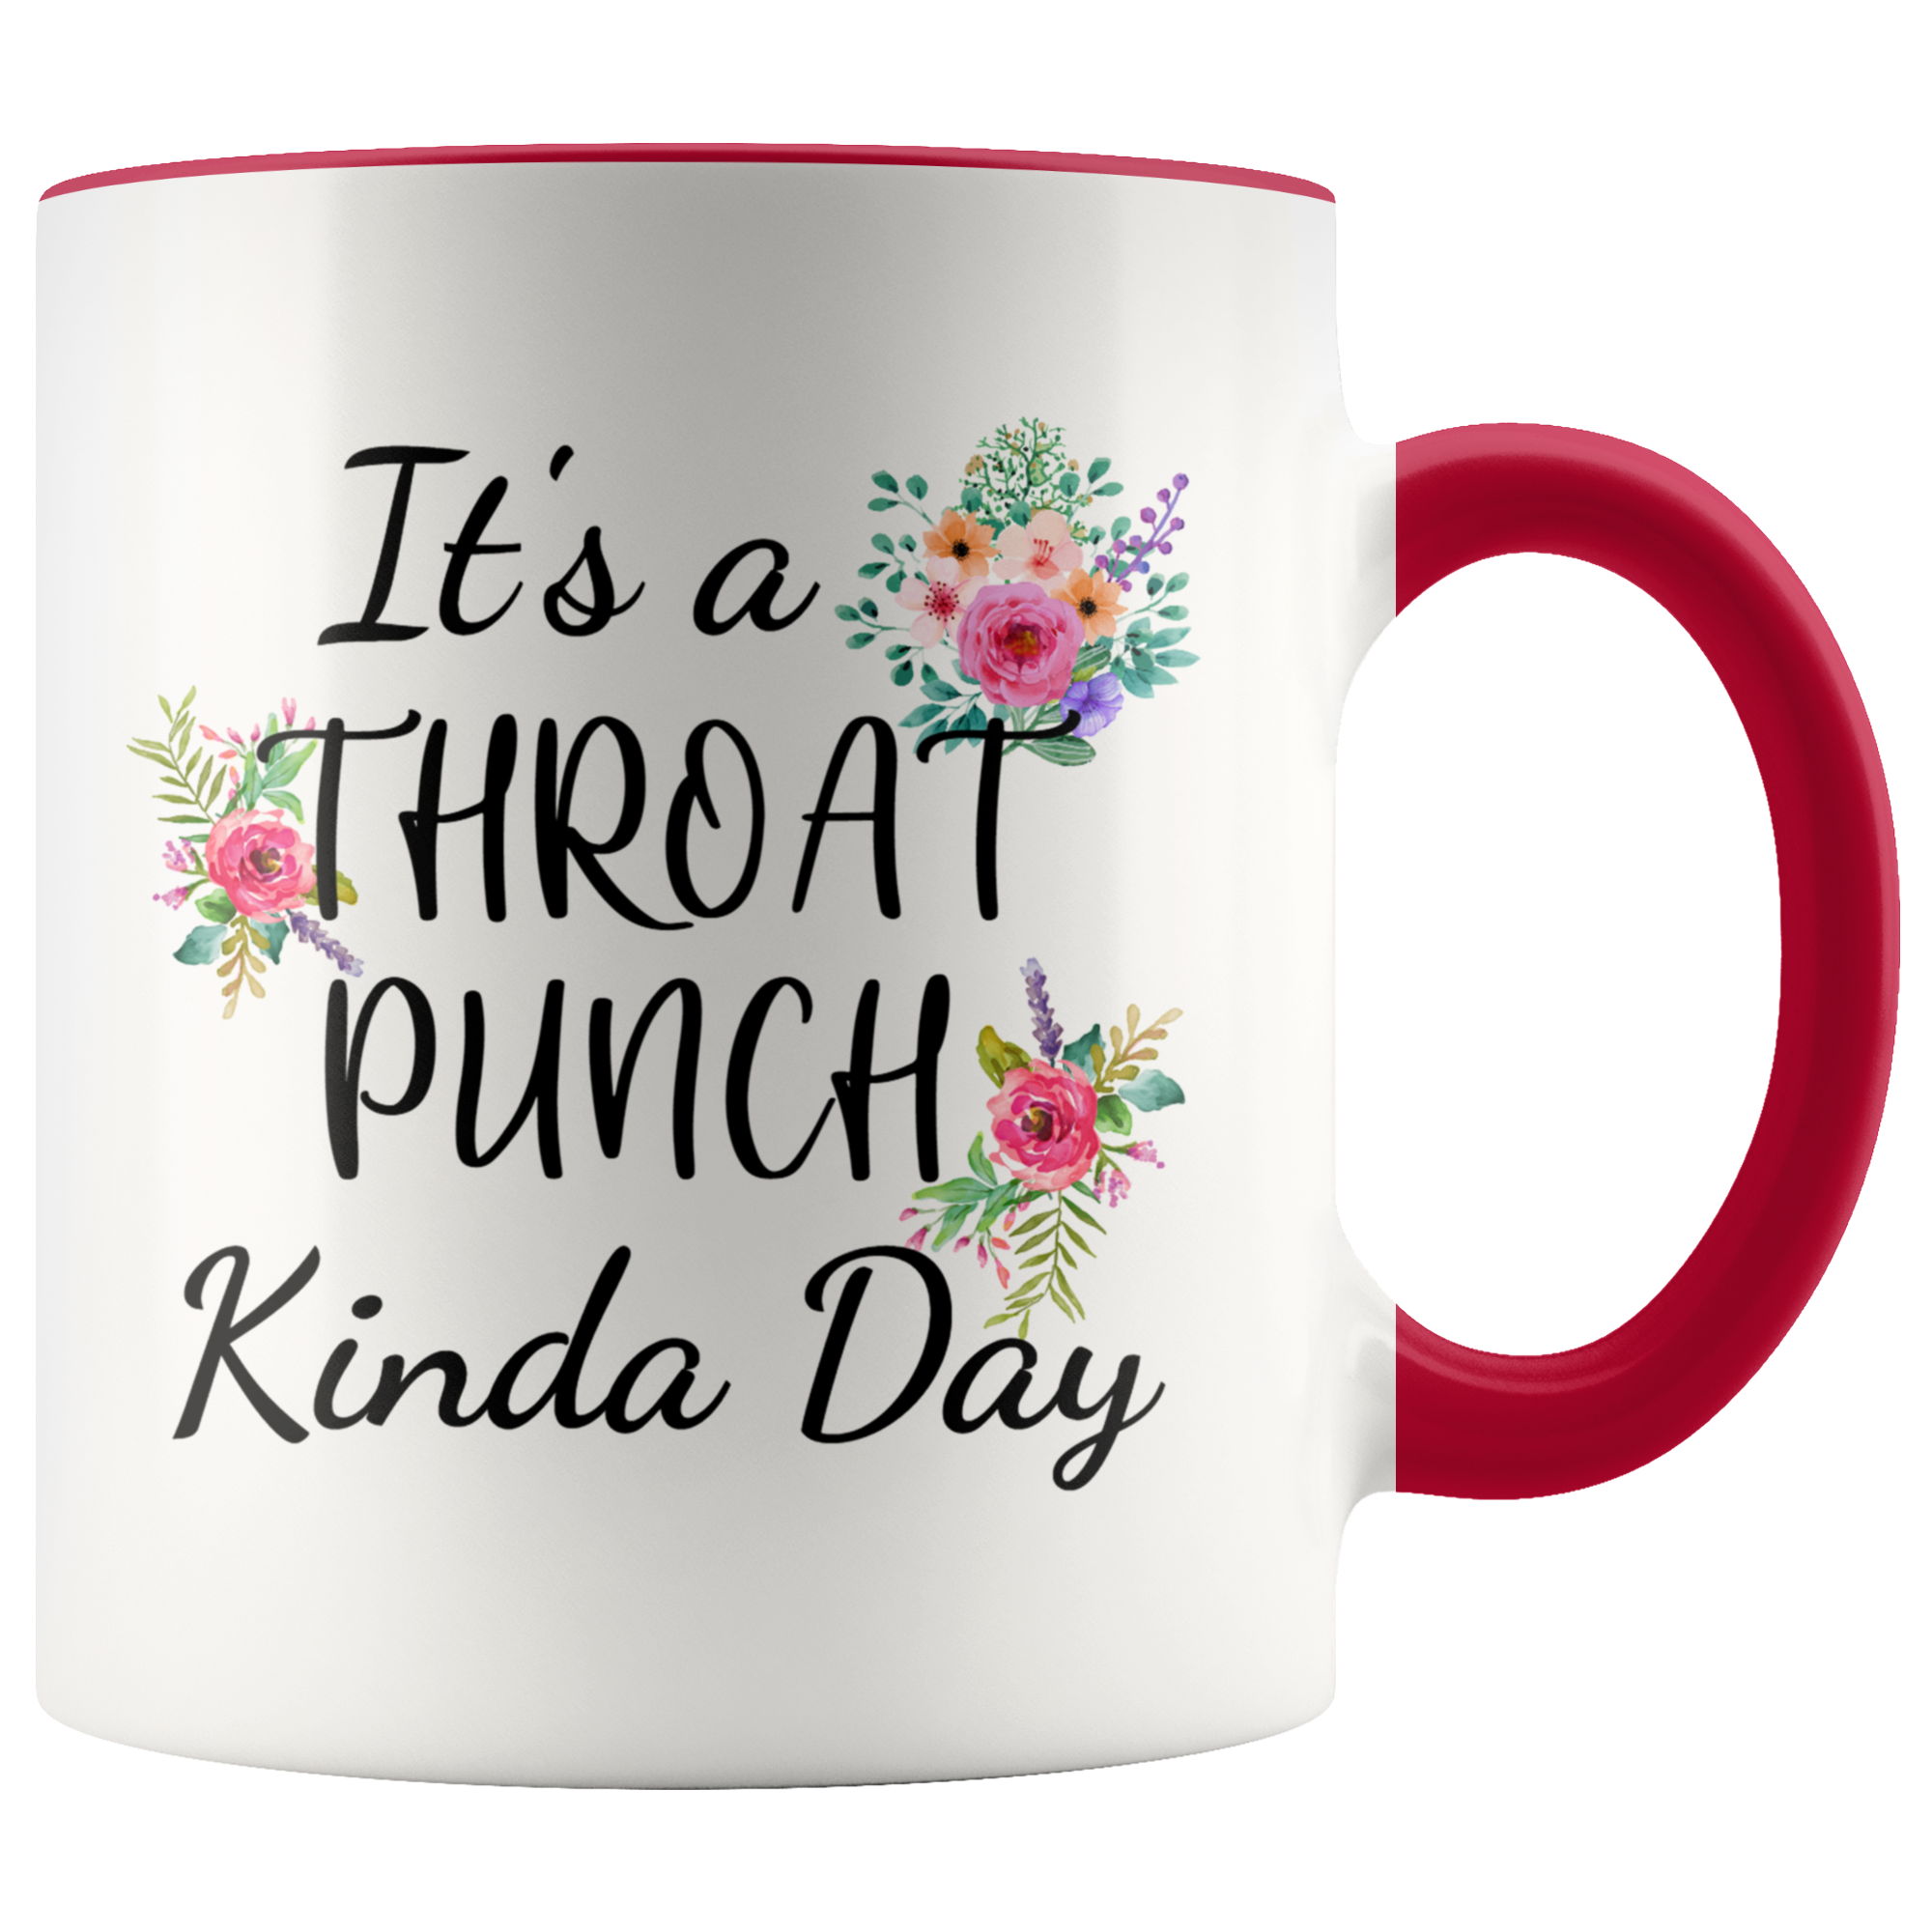 Throat Punch Kinda Day Mug